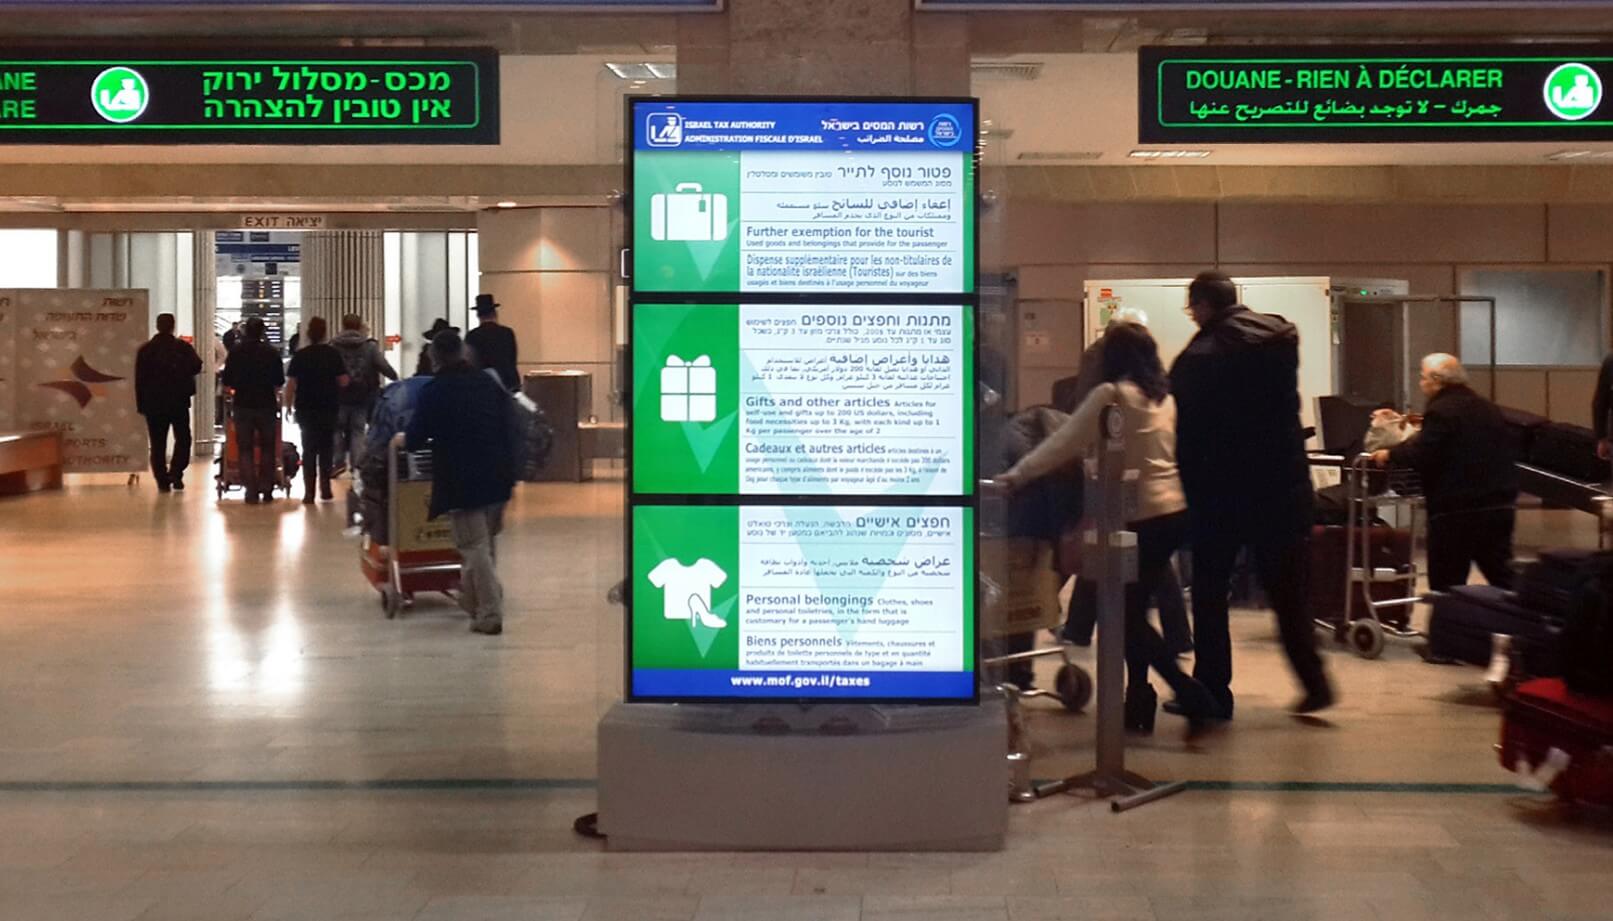 Airport digital signage